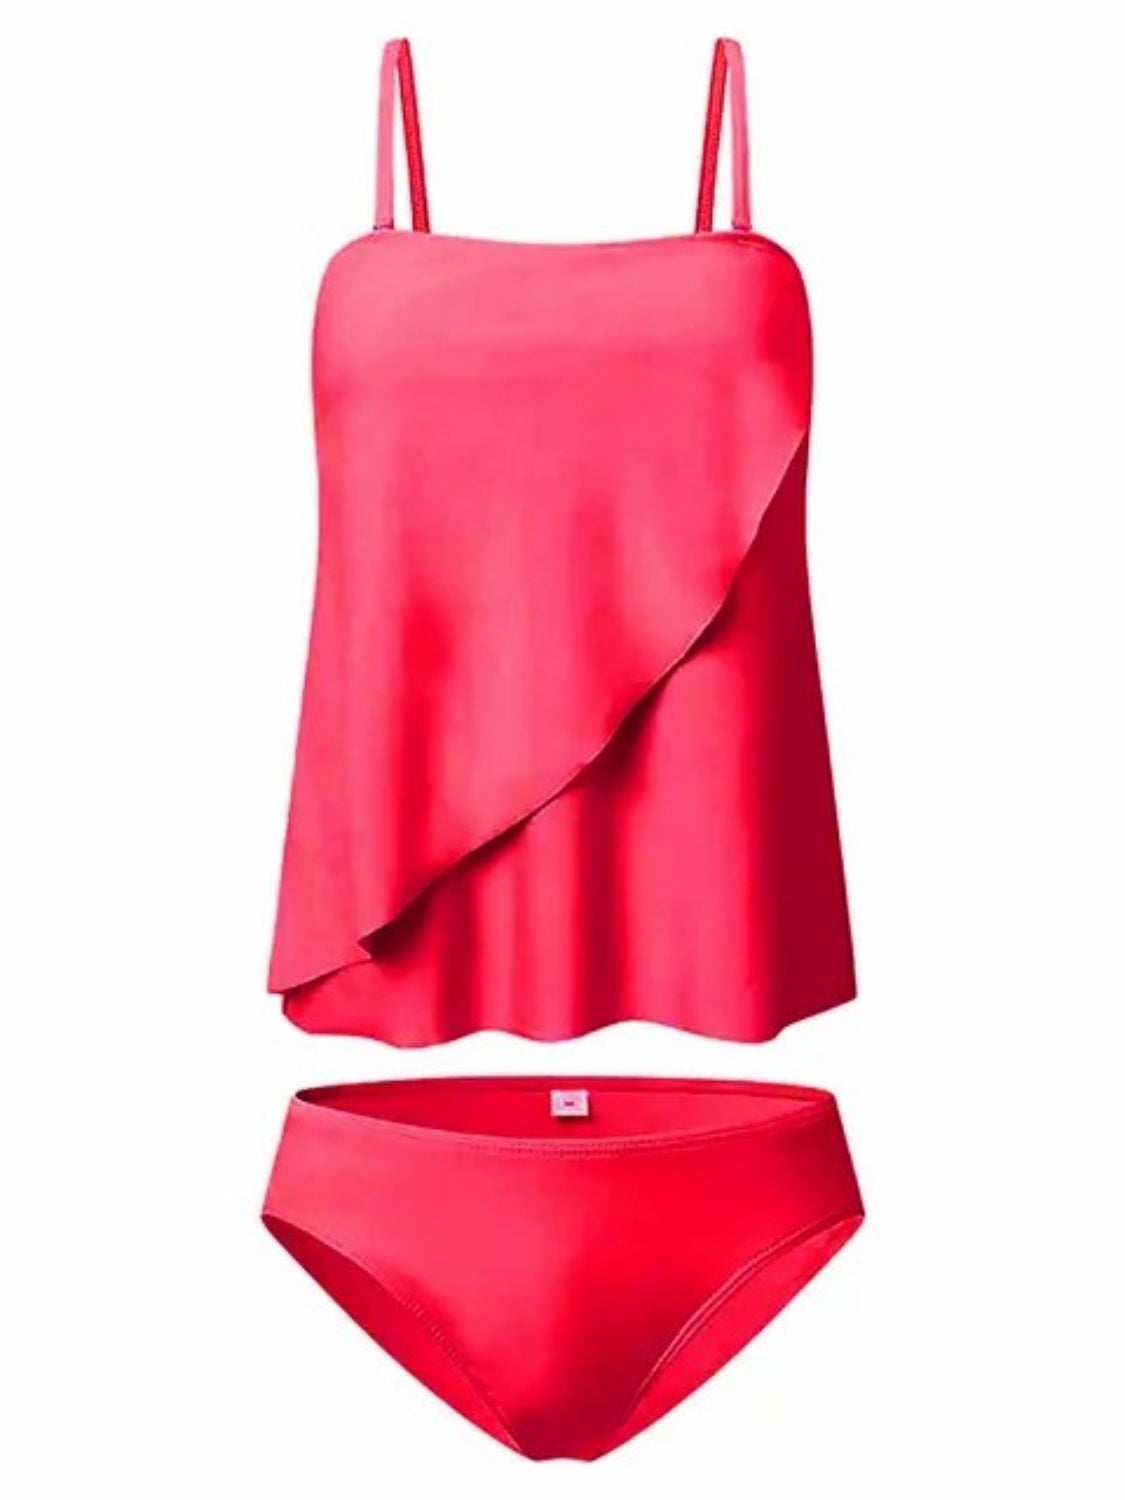 TEEK - Detachable Strap Top and Brief Swim Set SWIMWEAR TEEK Trend Deep Red S 